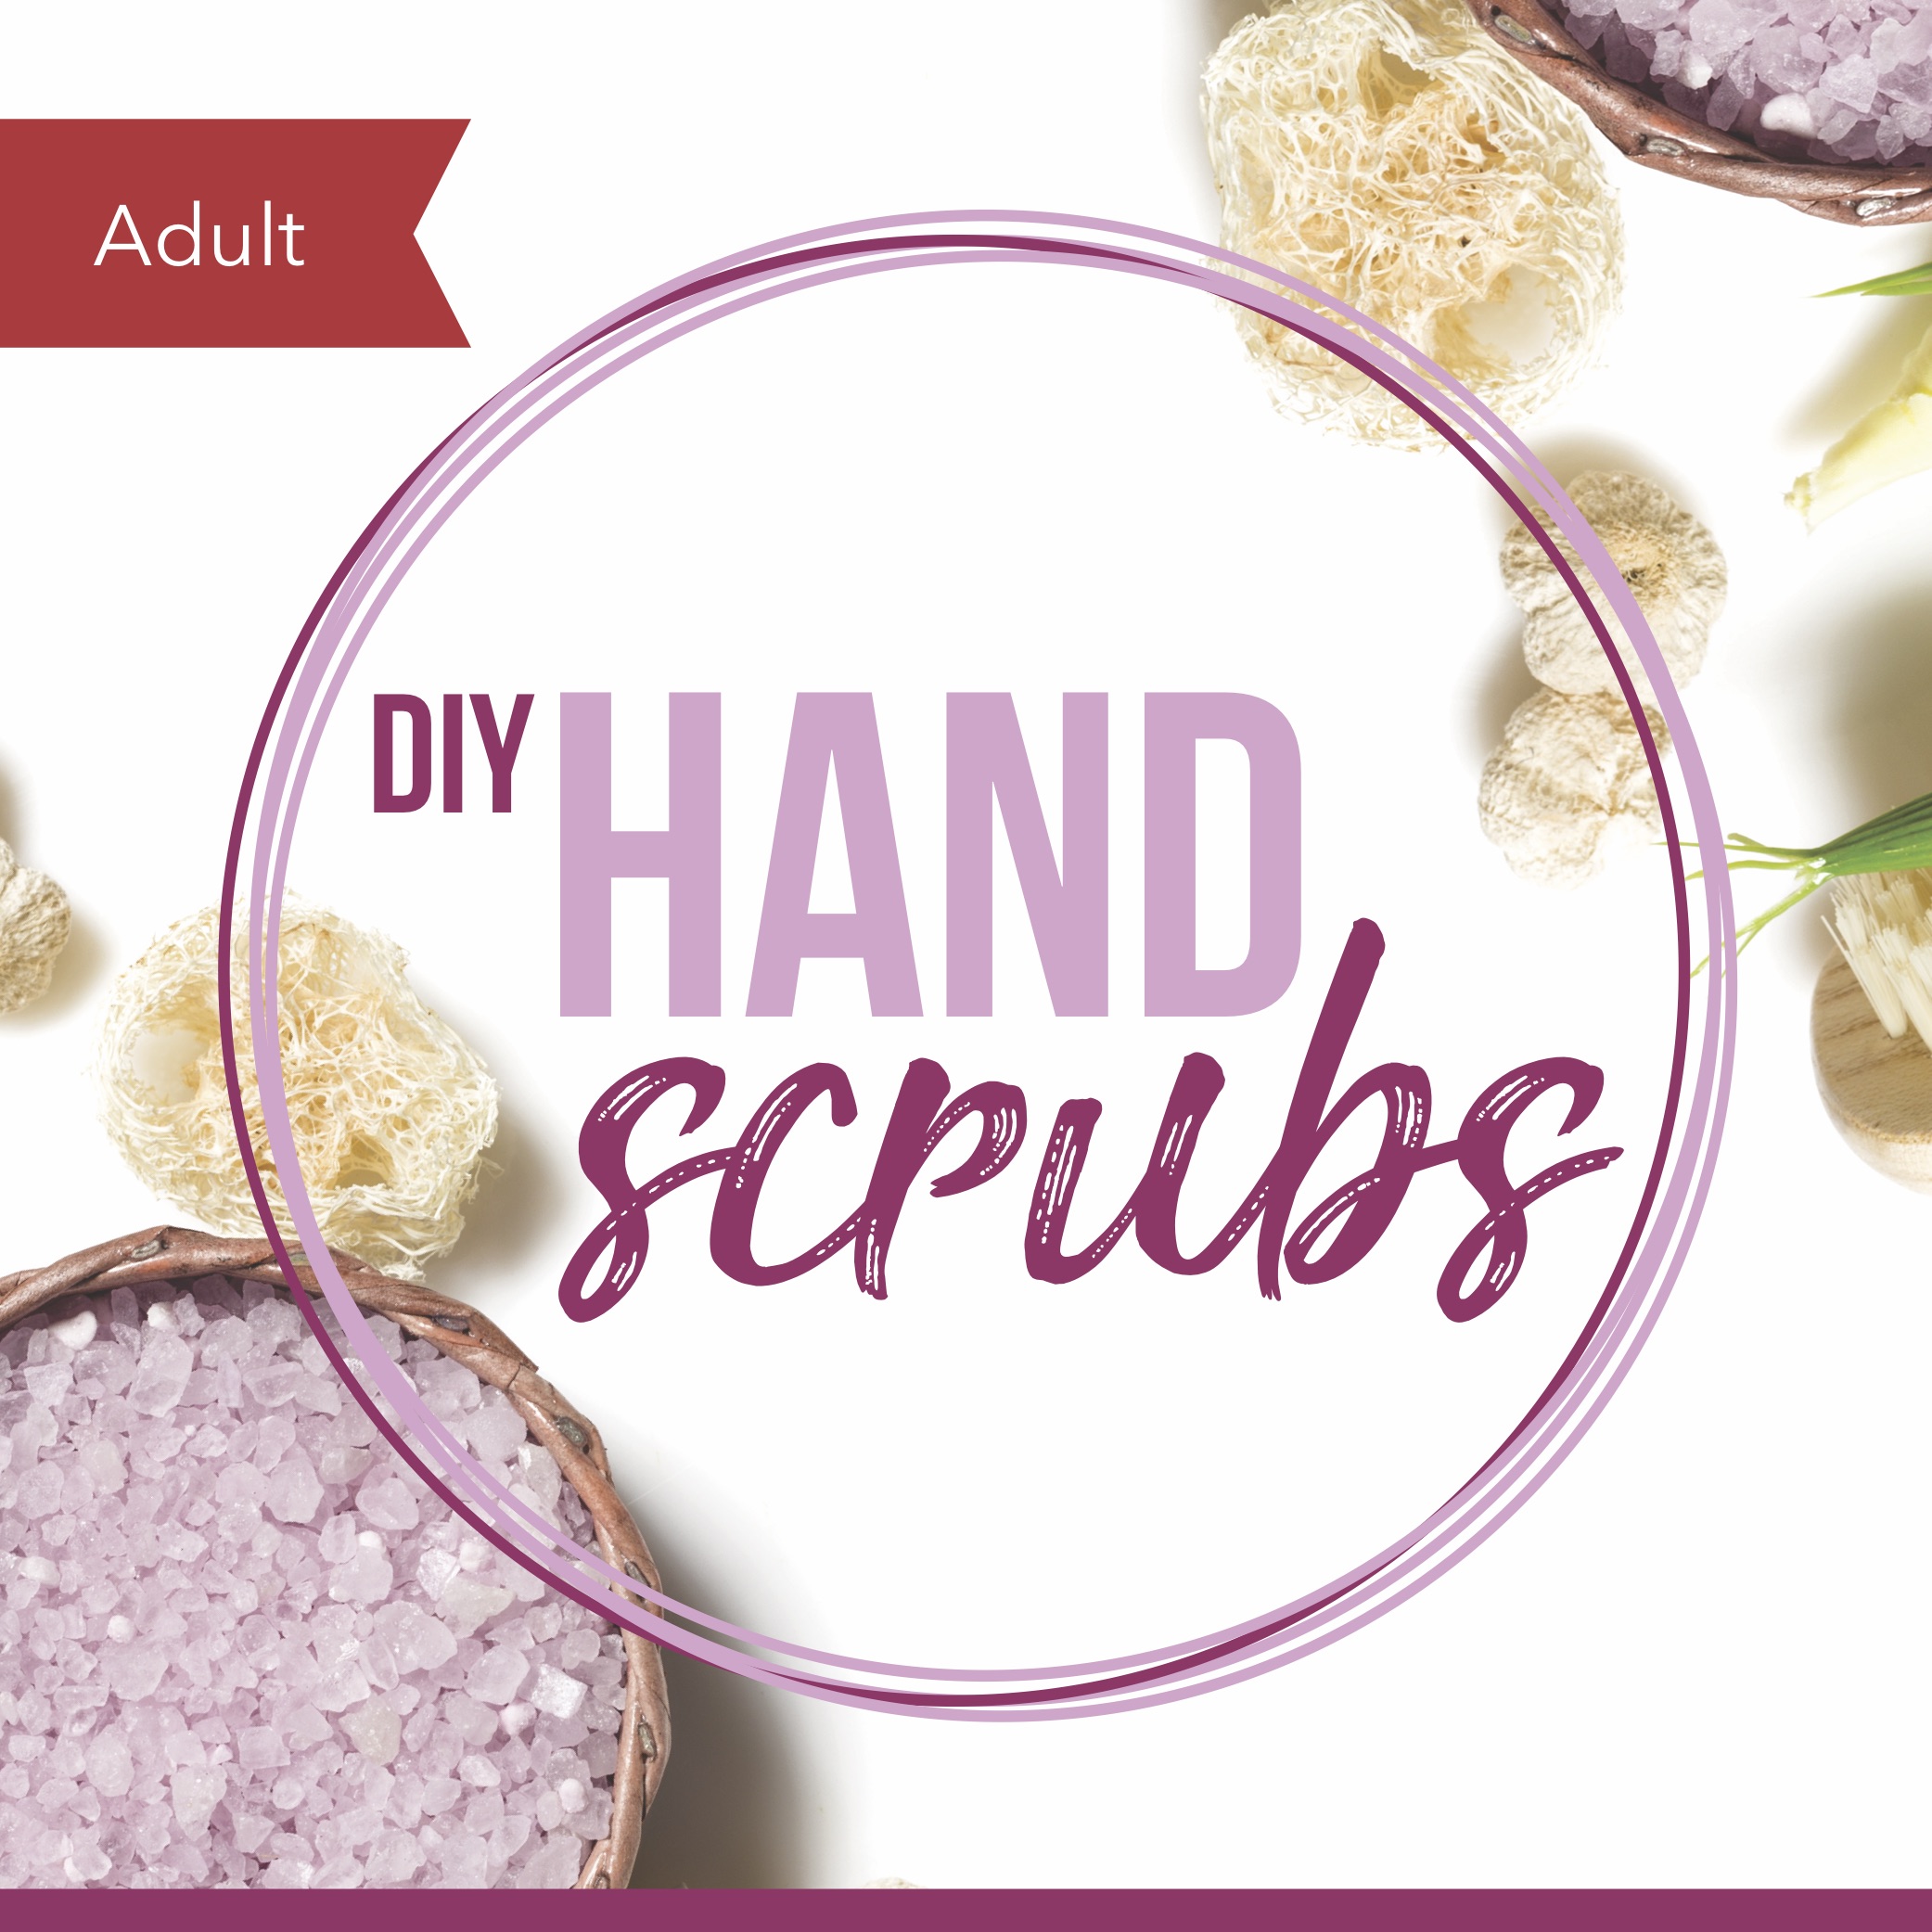 DIY Hand Scrubs